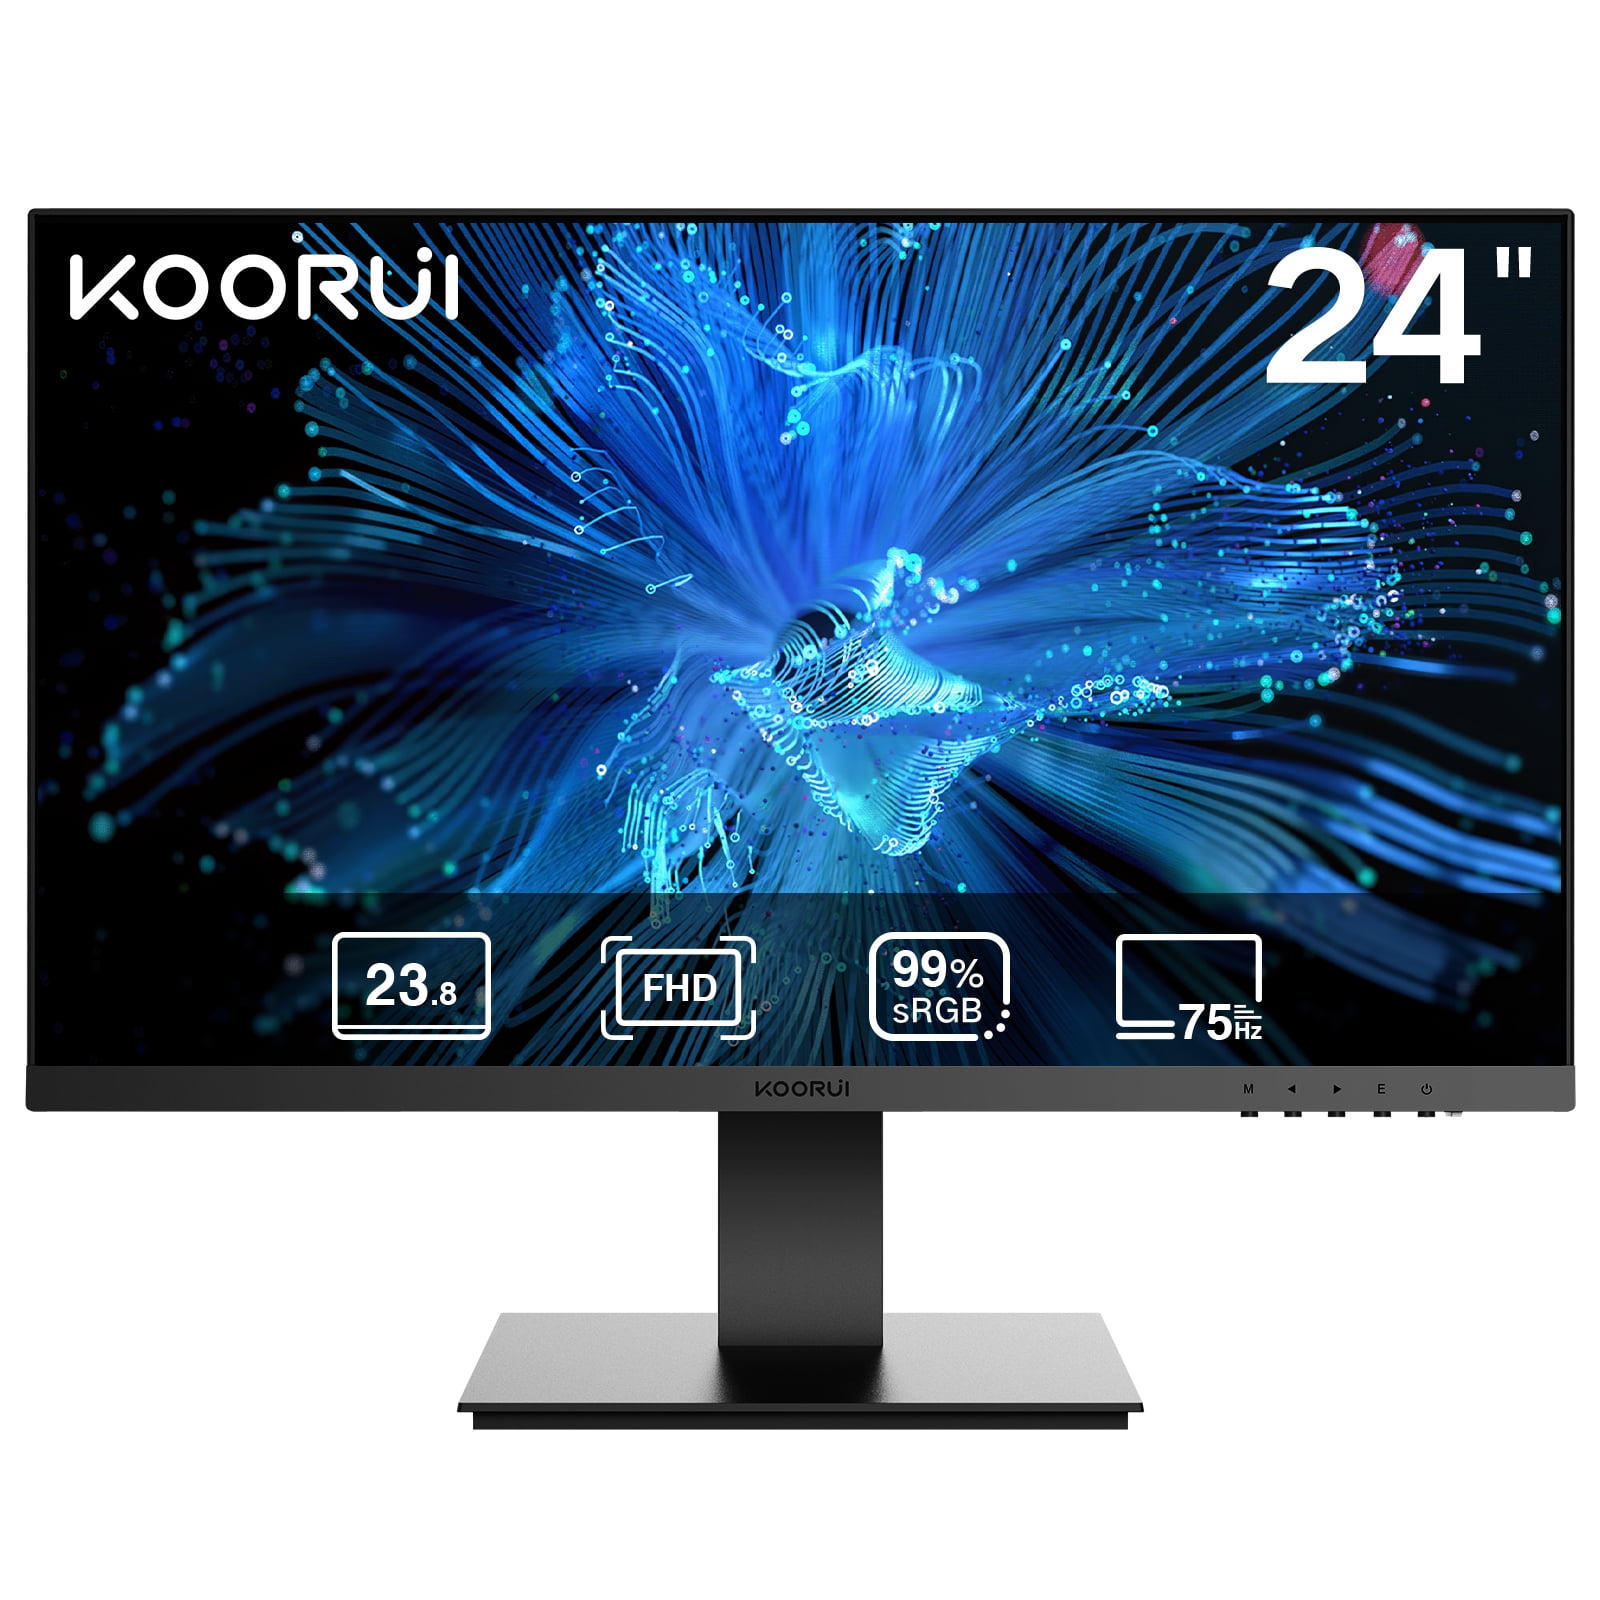 The best-seller monitor - KOORUI 24E4 #KOORUI #monitor #kooruimonitor